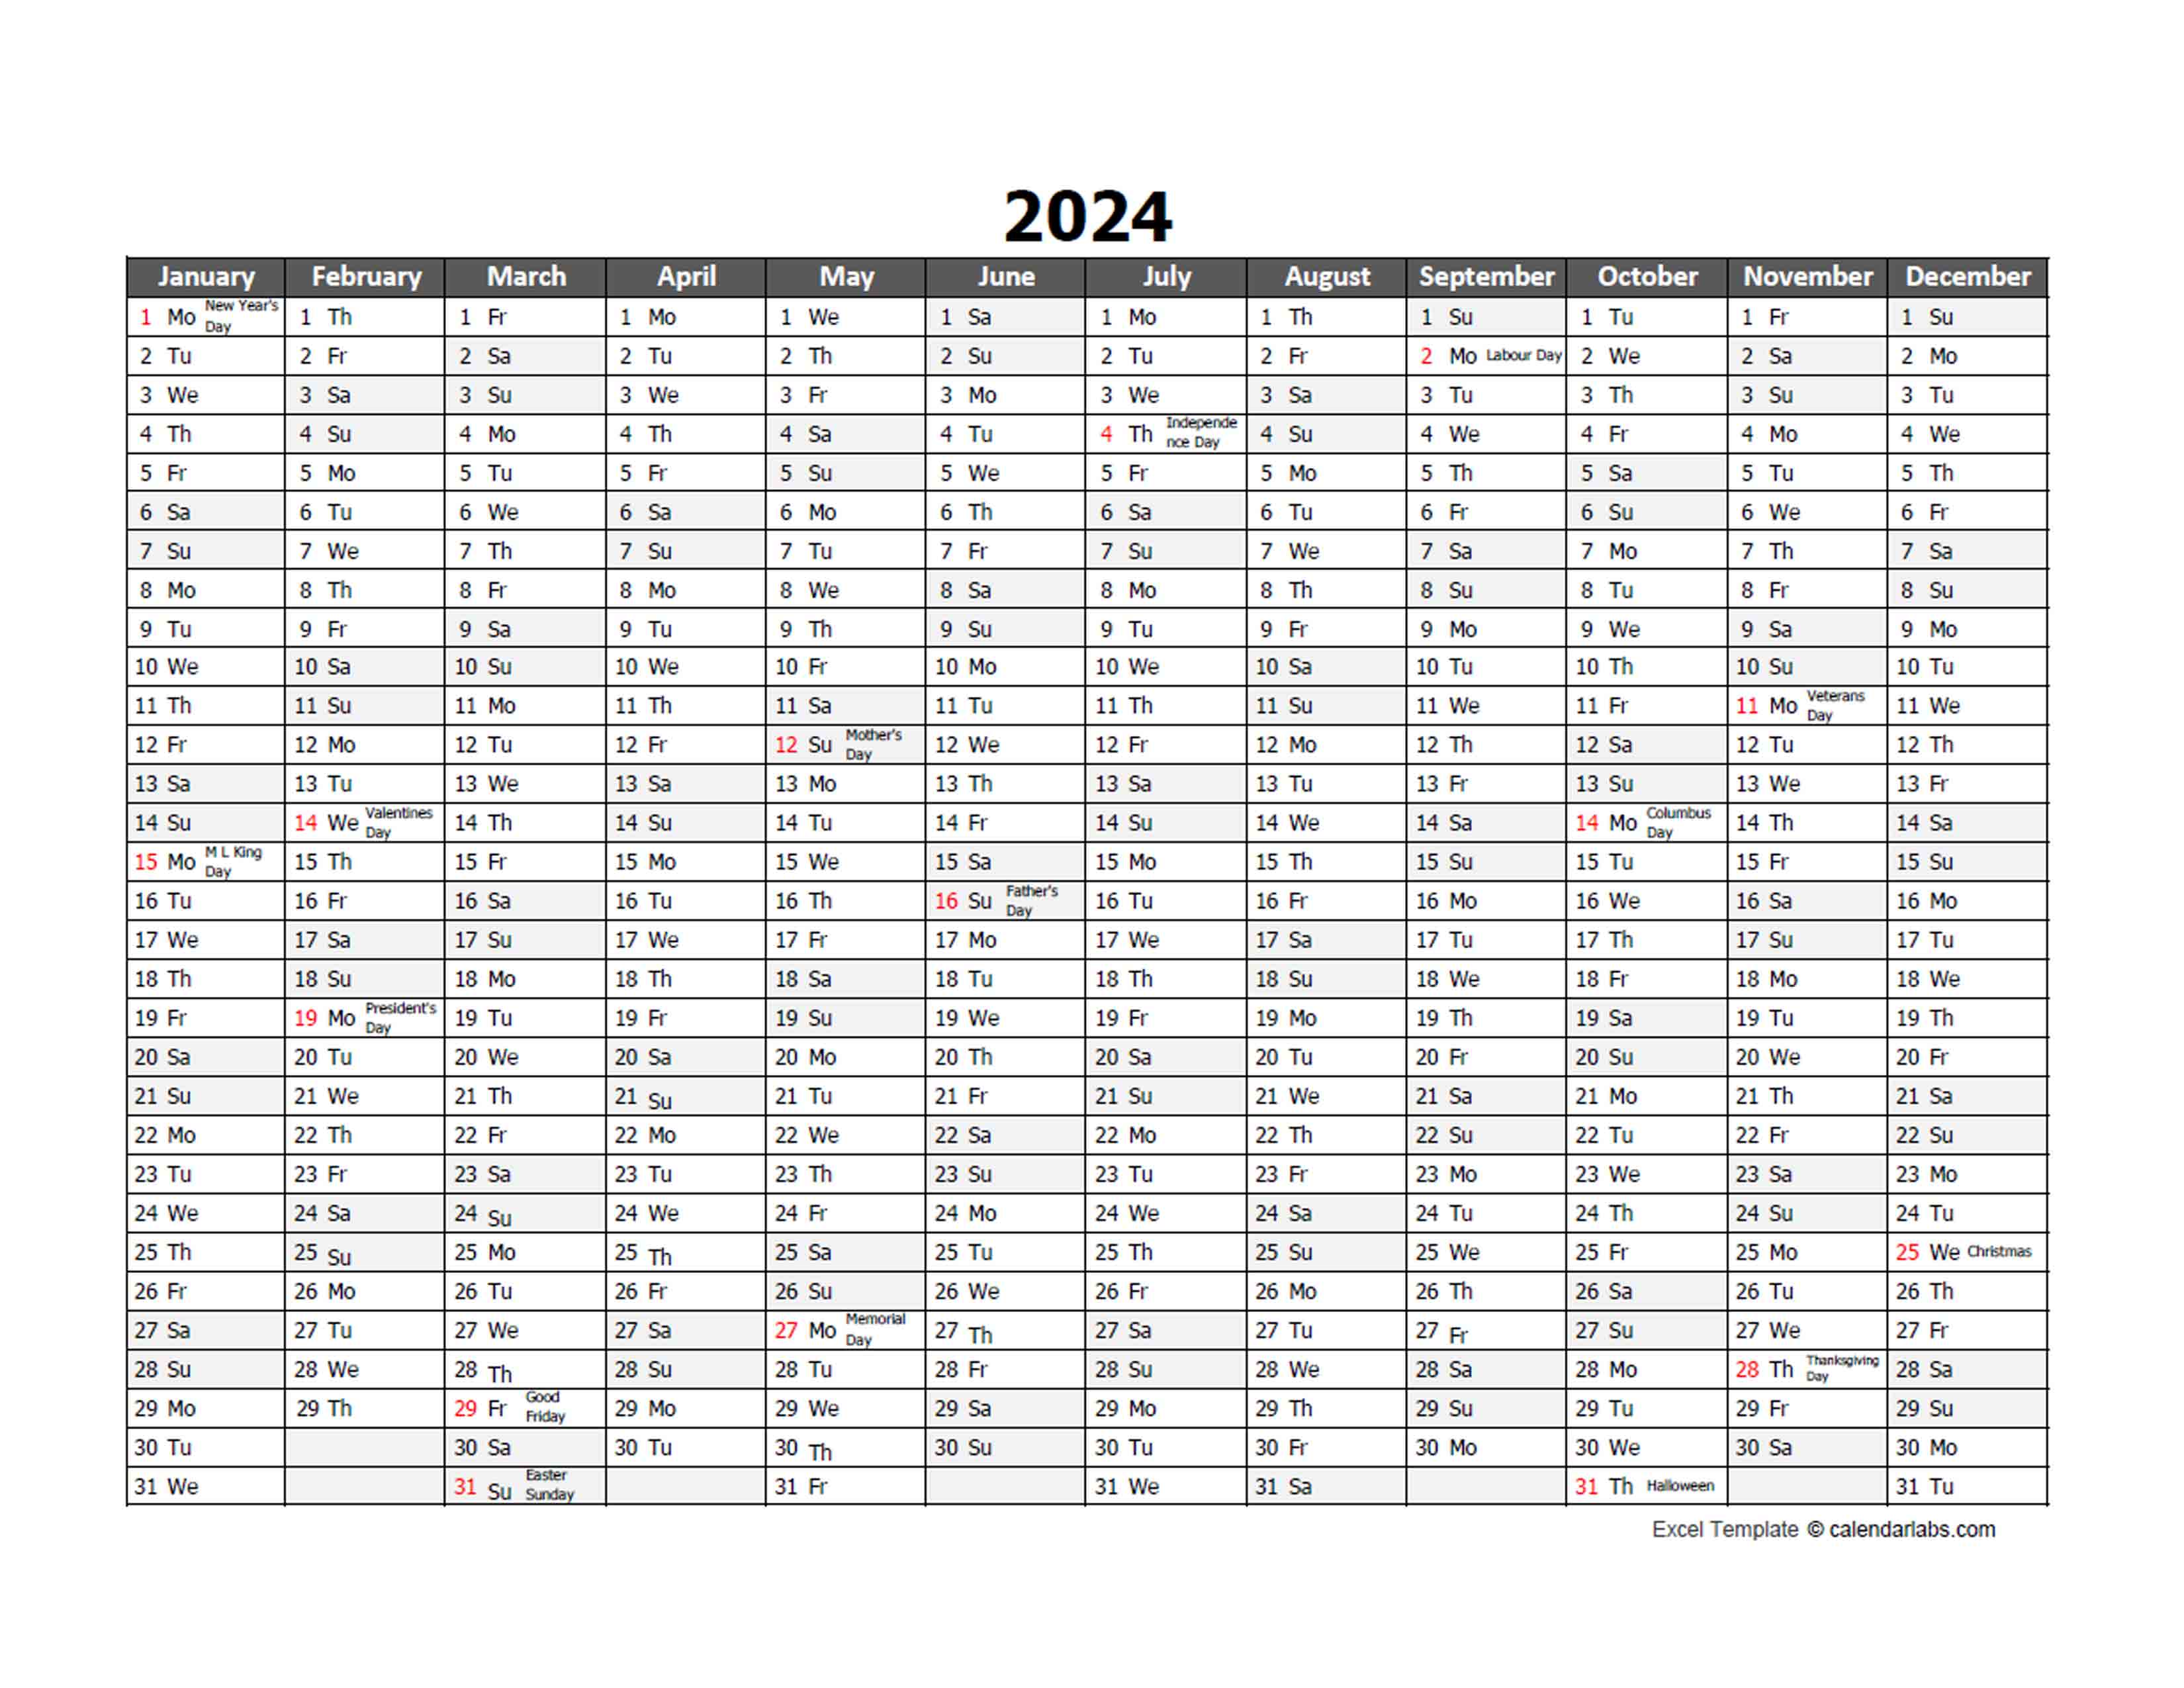 editable-yearly-calendar-2024-excel-worksheet-sydel-fanechka